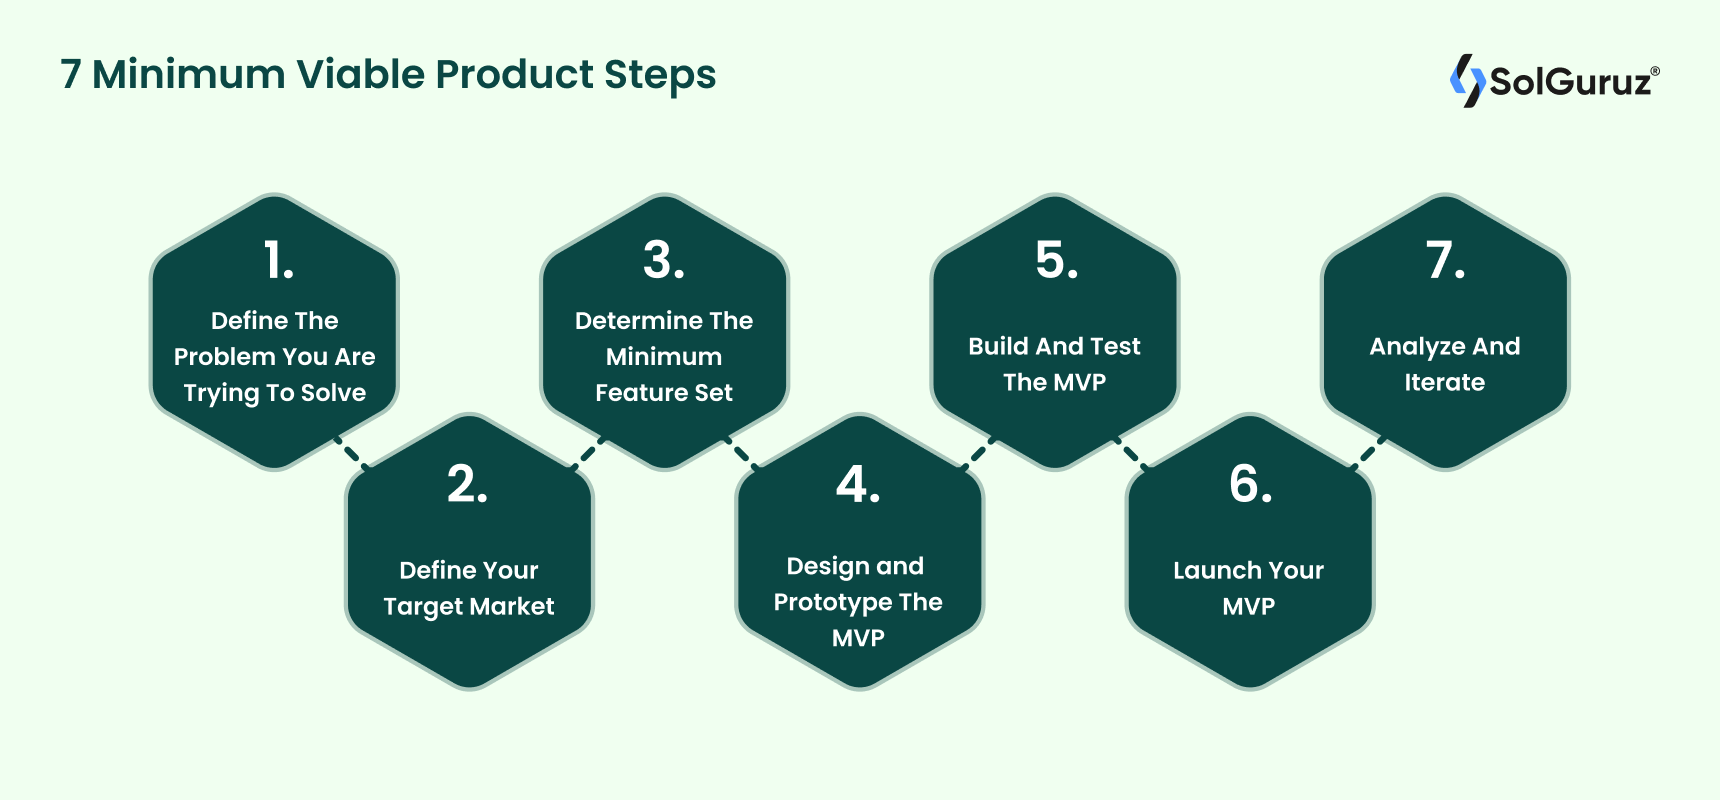 7 Minimum Viable Product Steps